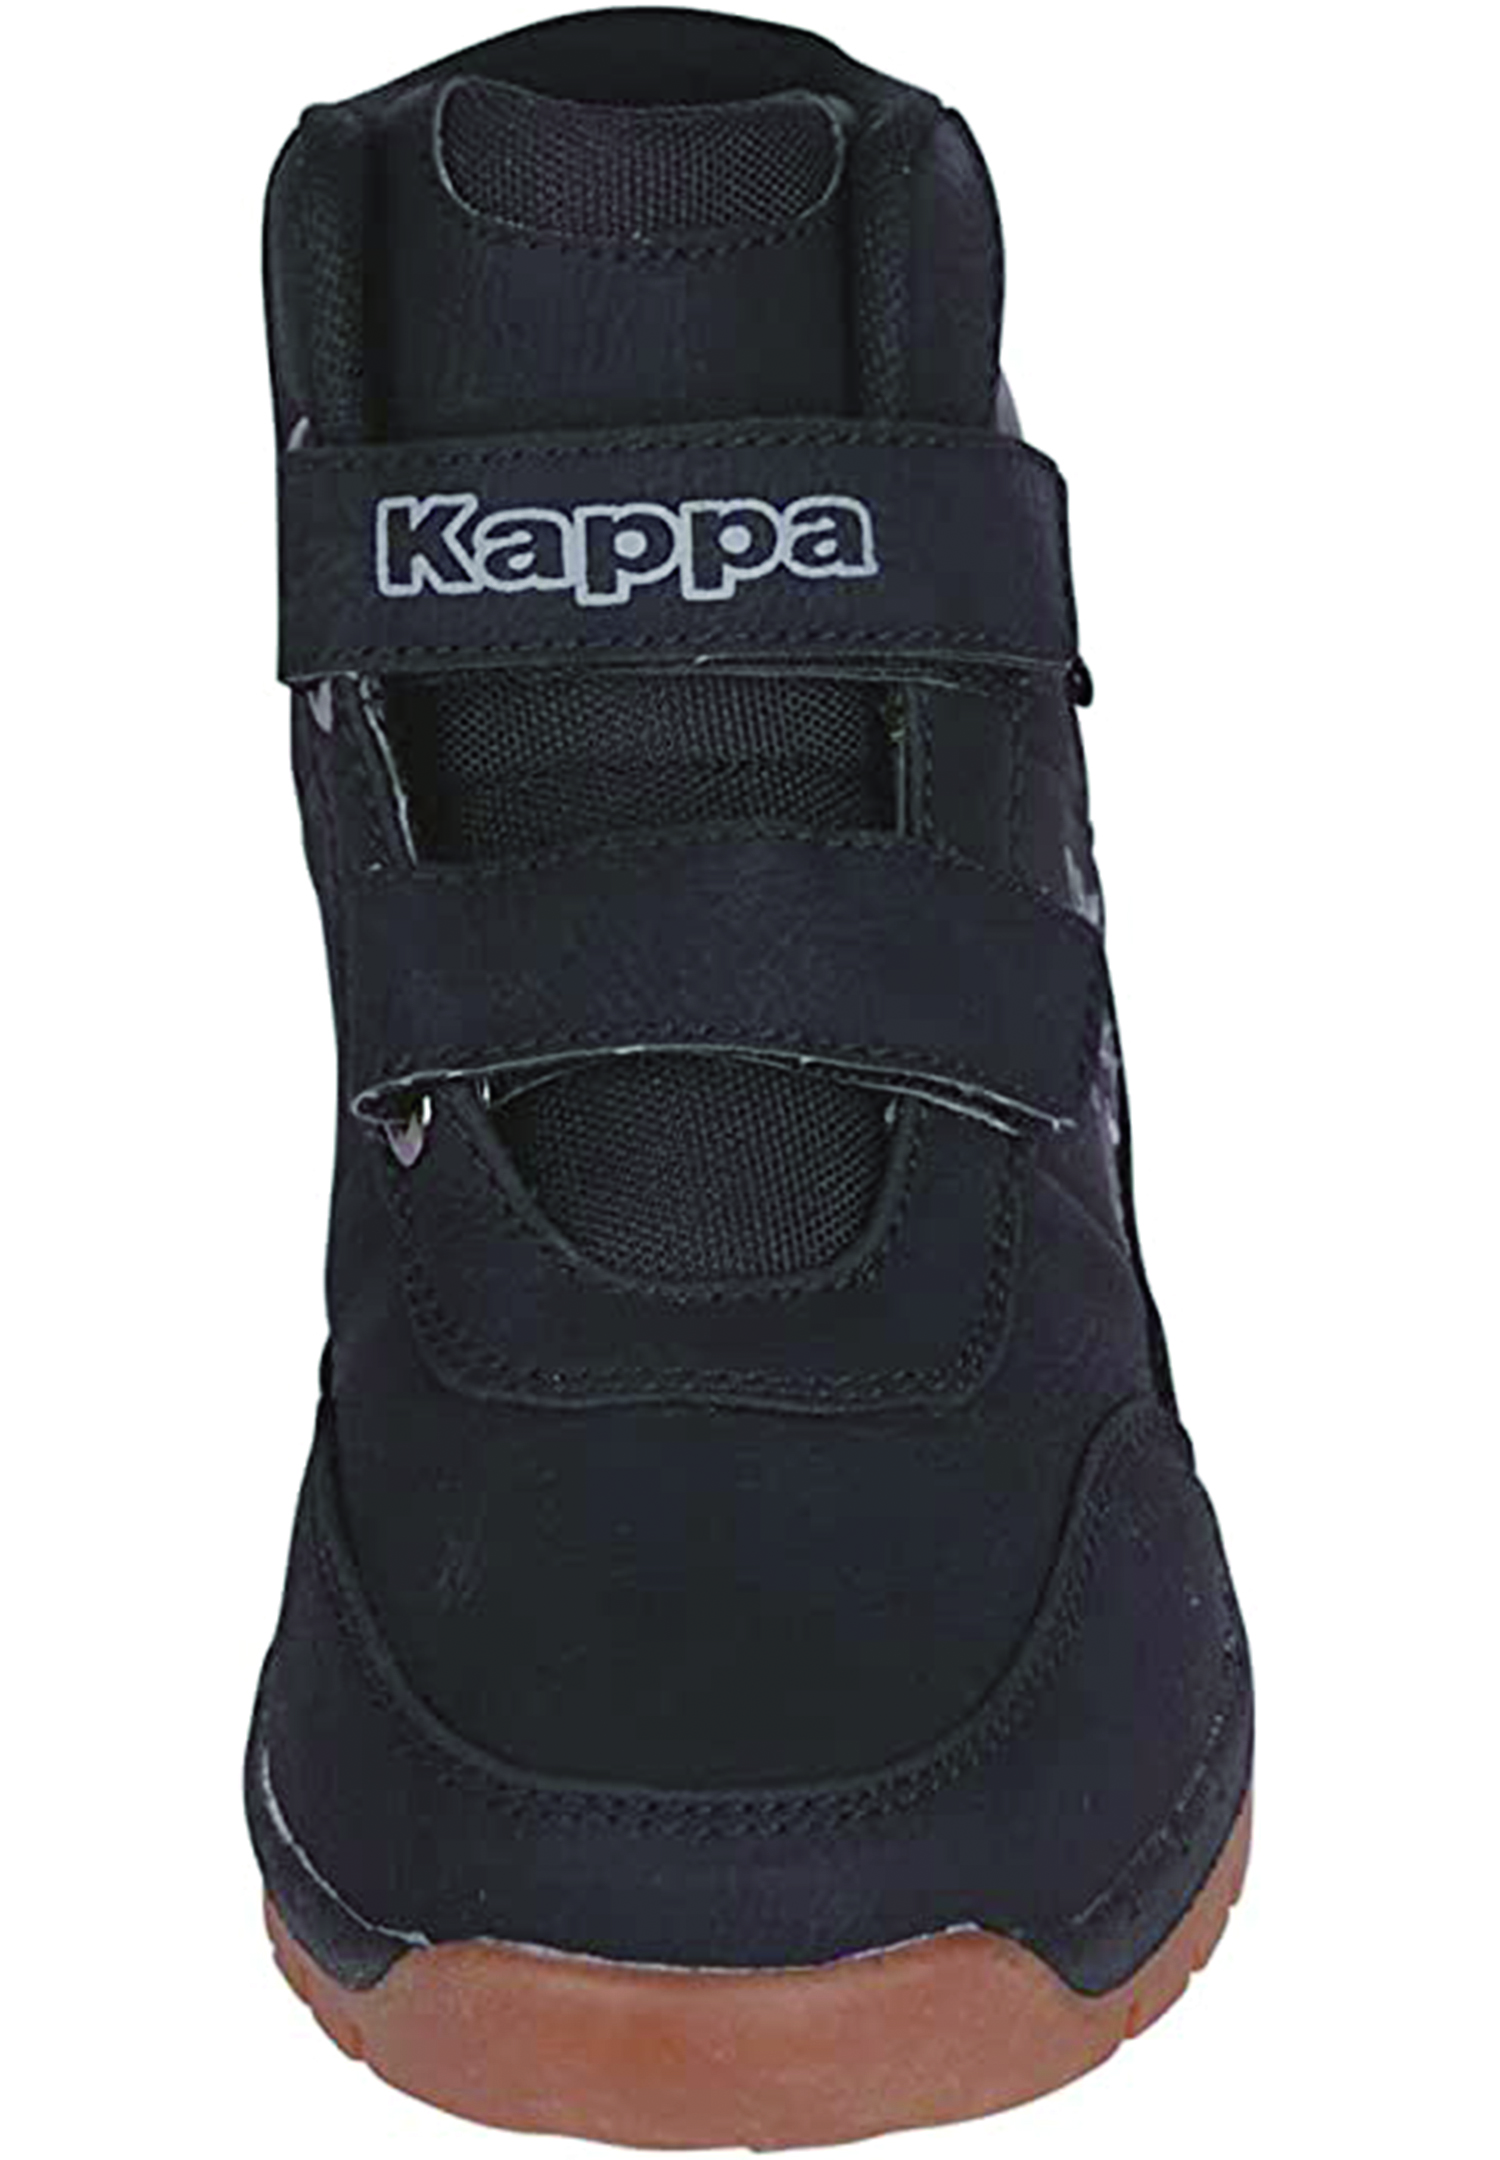 Kappa Unisex Kinder Sneaker High Top Stylecode 260239K 1111 schwarz